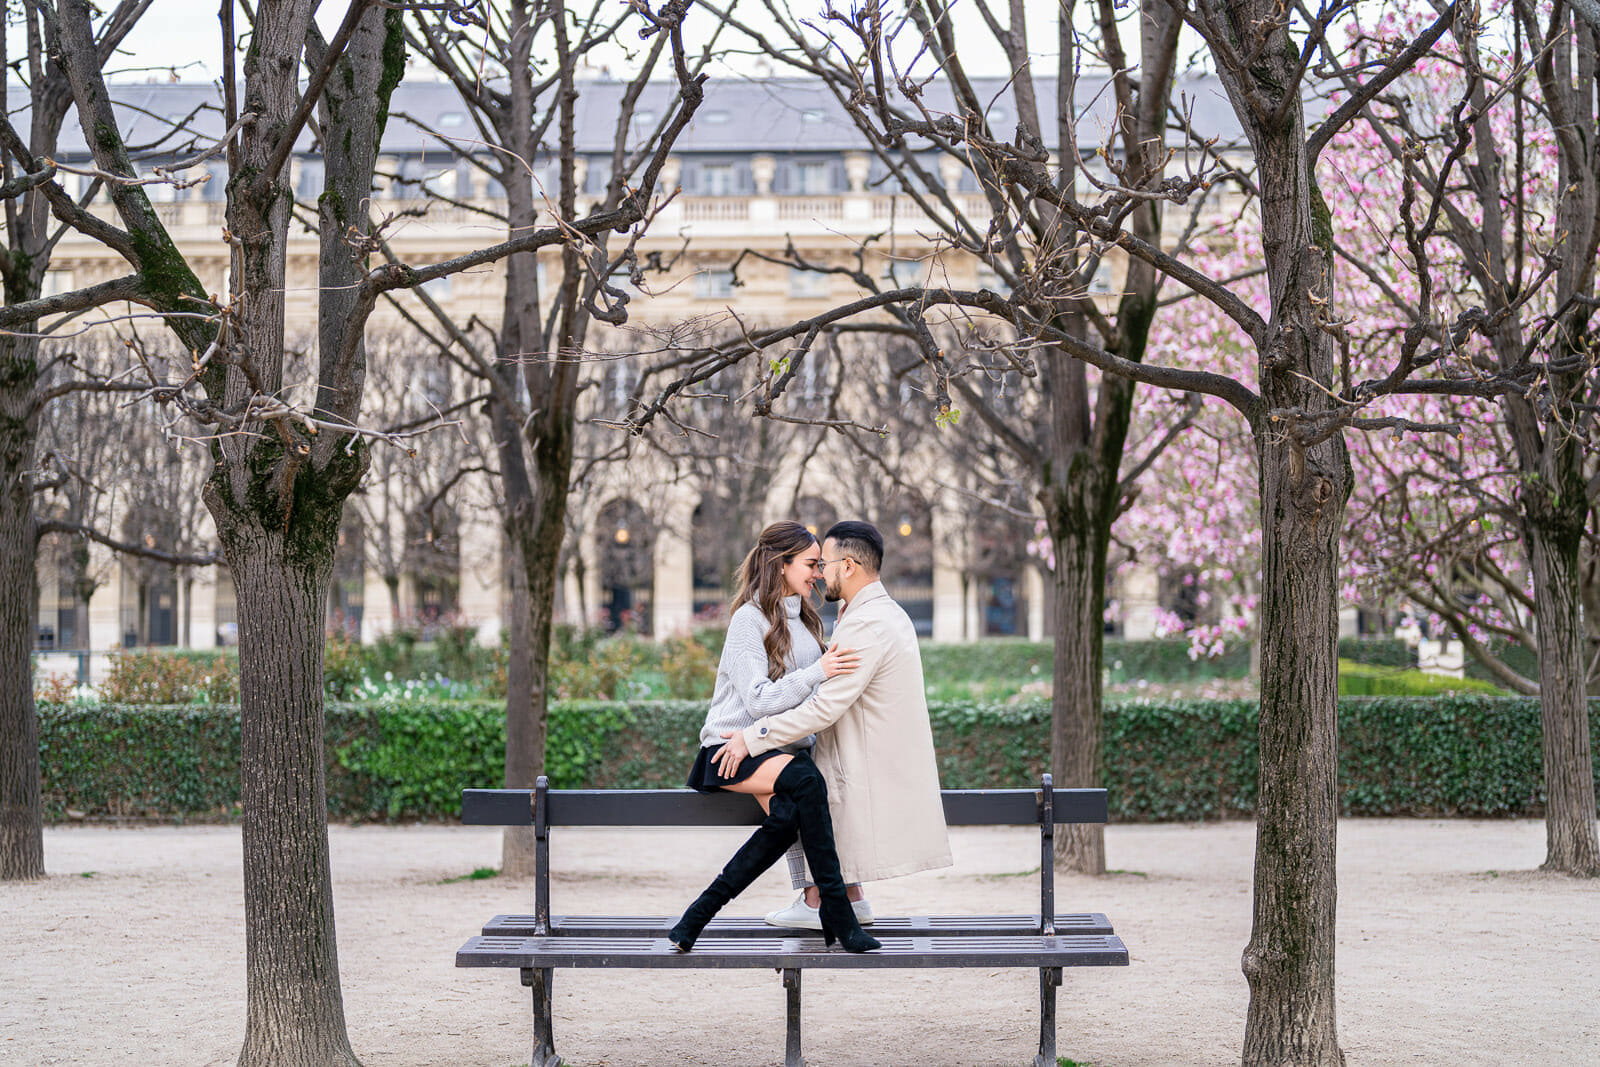 Dreamy Paris engagement photos at Palais Royal gardens